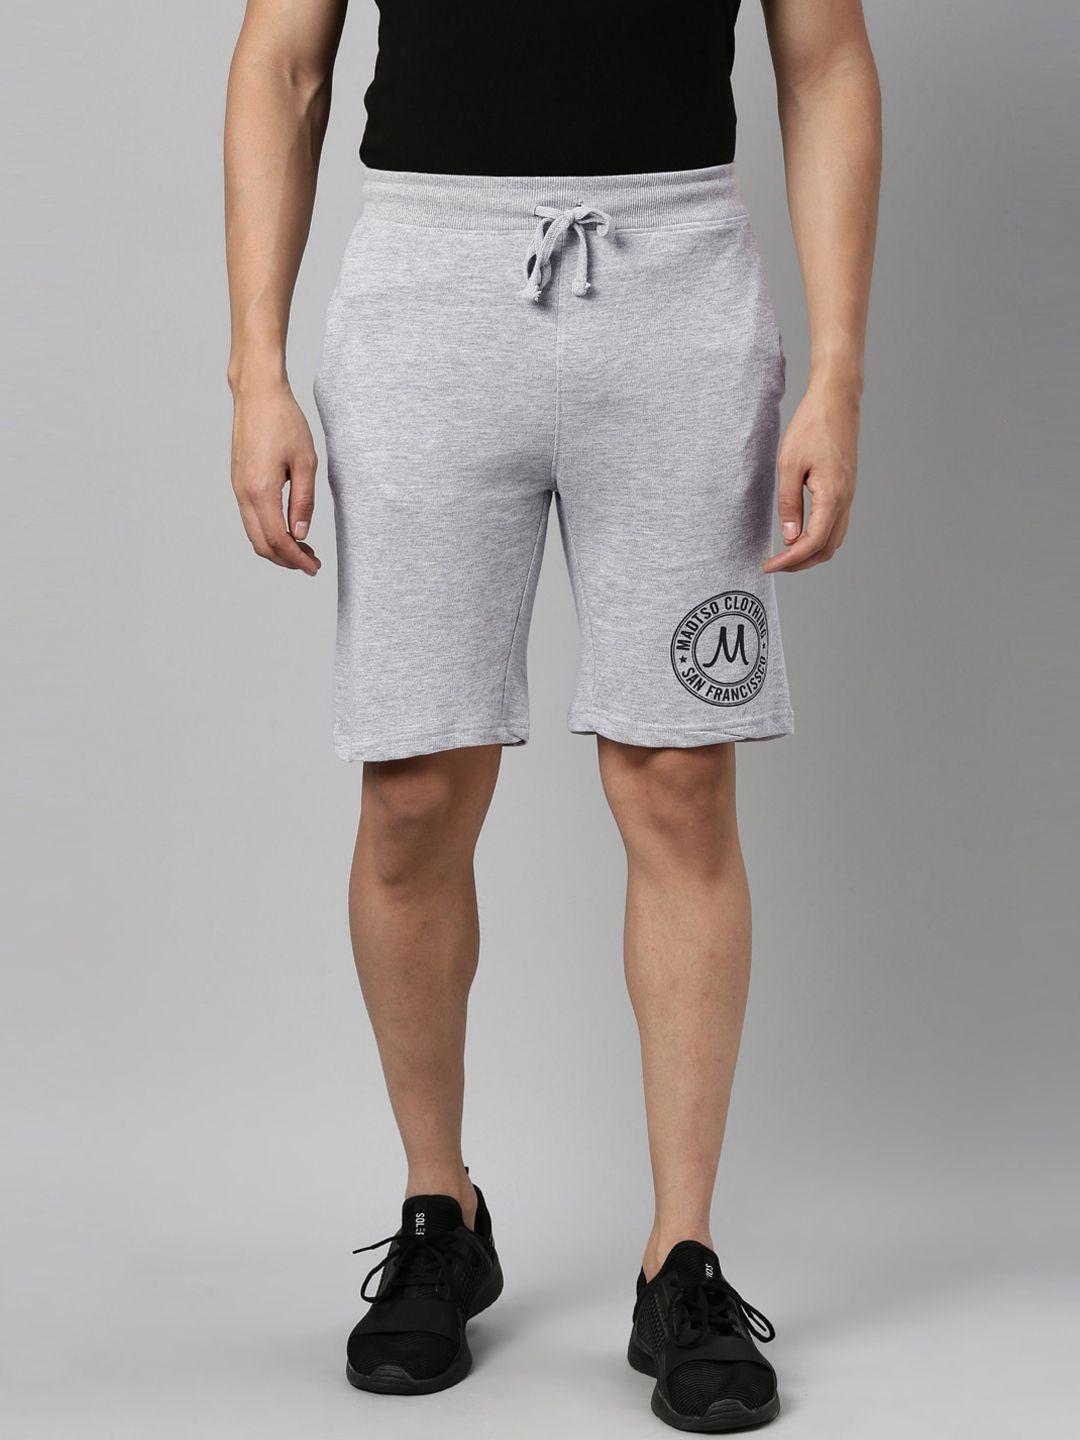 madsto-men-grey-mid-rise-sports-shorts